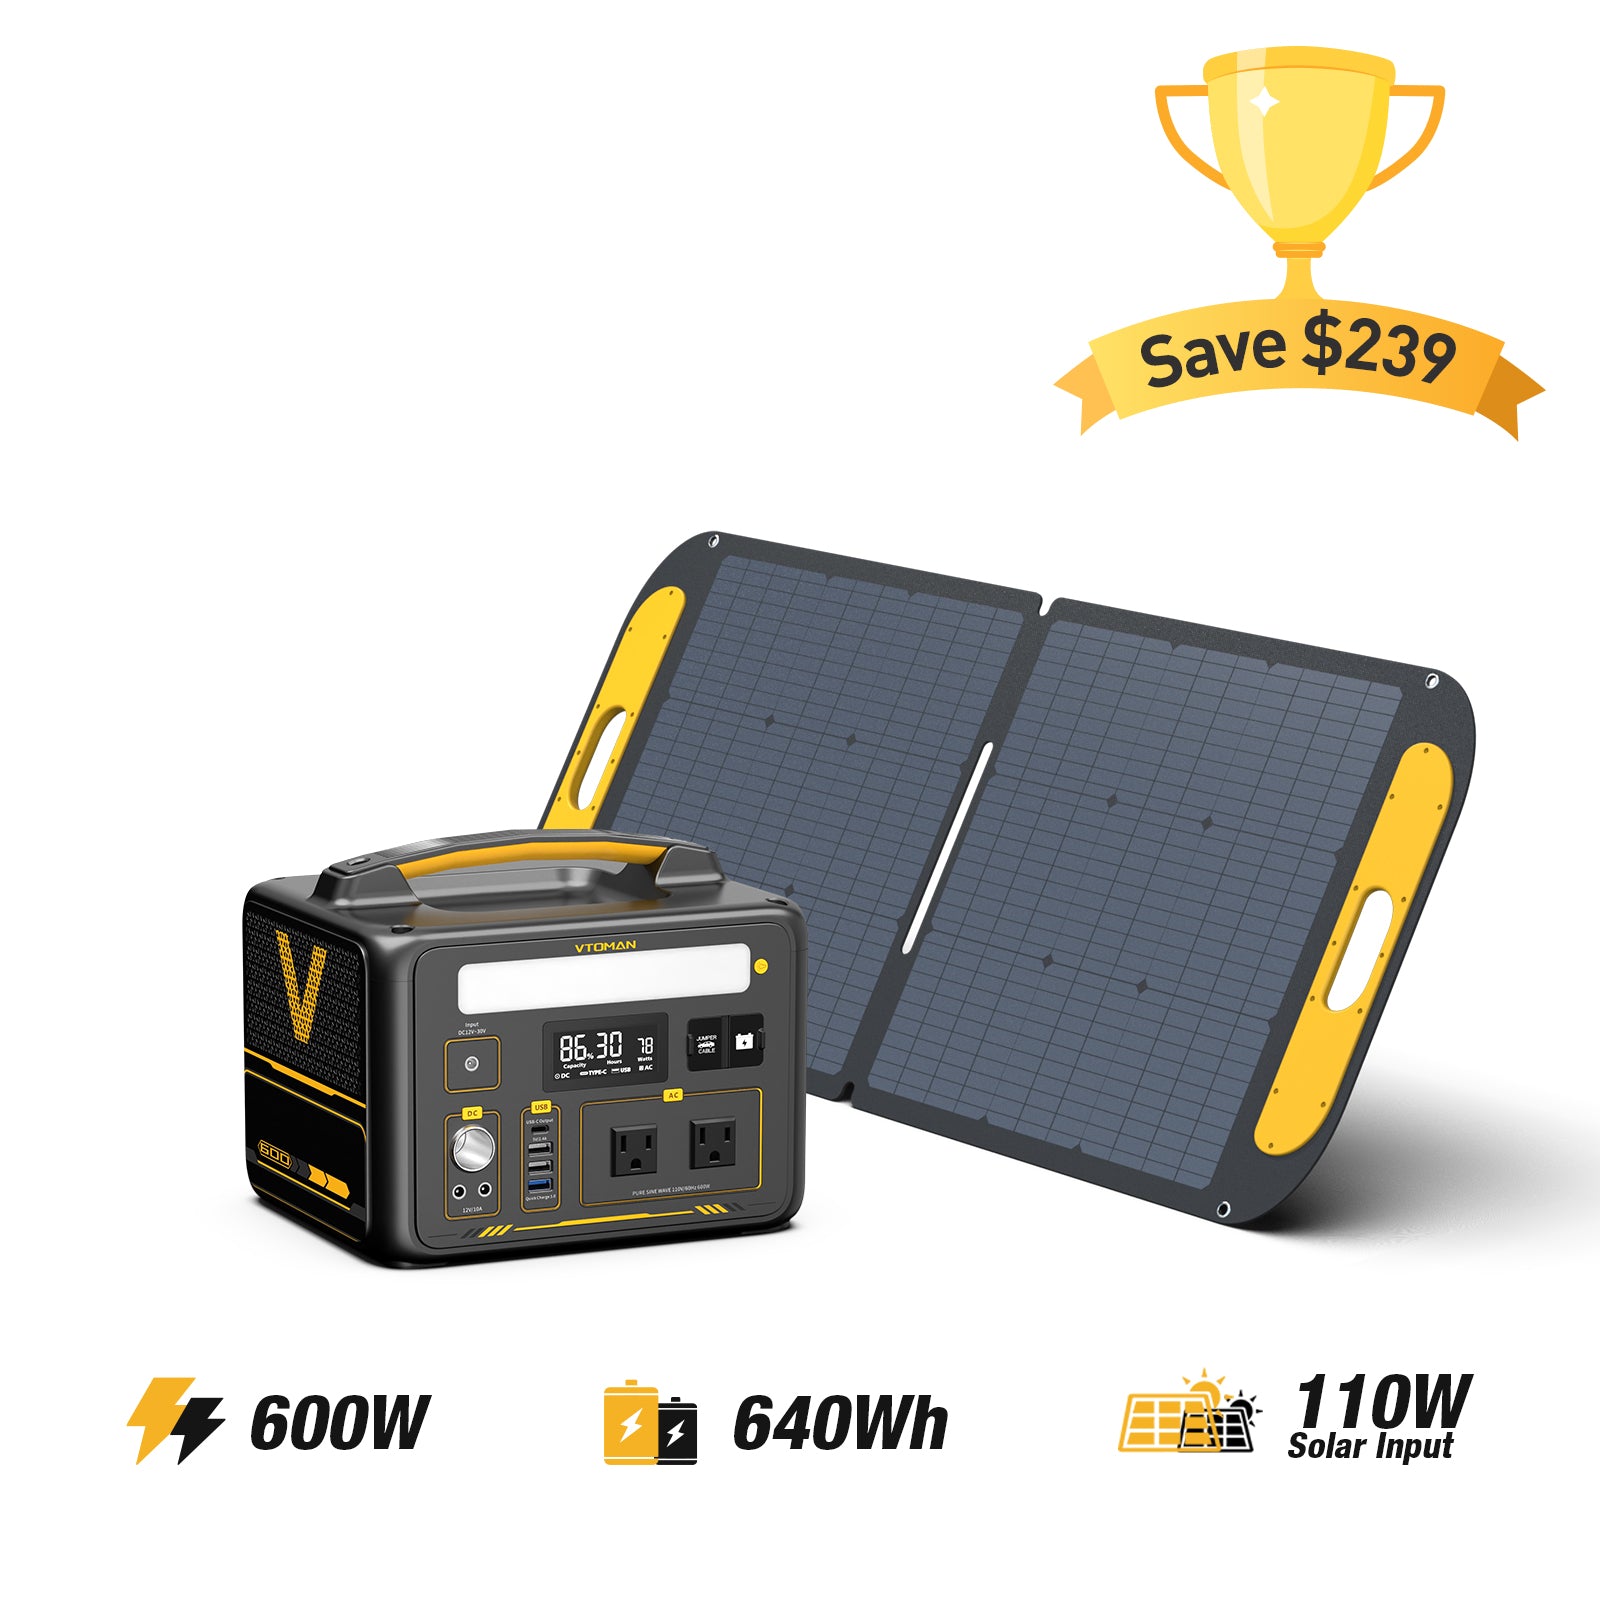 Jump 600W/640Wh 110W Solar Generator